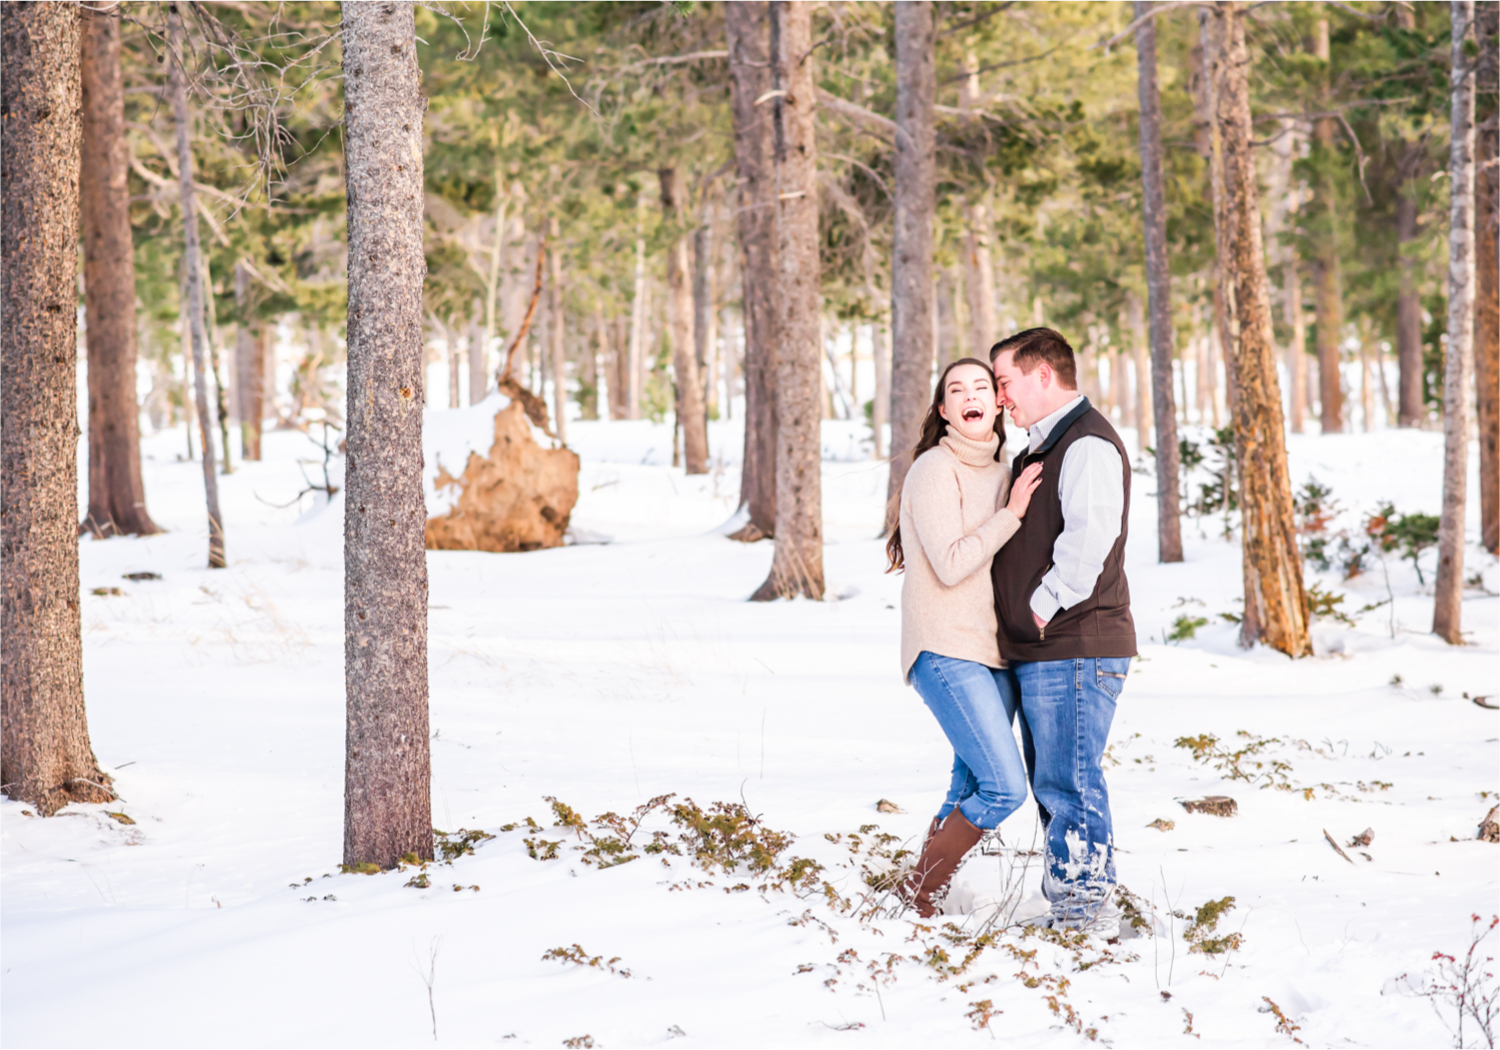 Lily Lake Winter Engagement in Estes Park | Britni Girard Photography - Colorado Wedding Photographer | Rocky Mountain National Park Photography and Downtown Estes Park River Walk